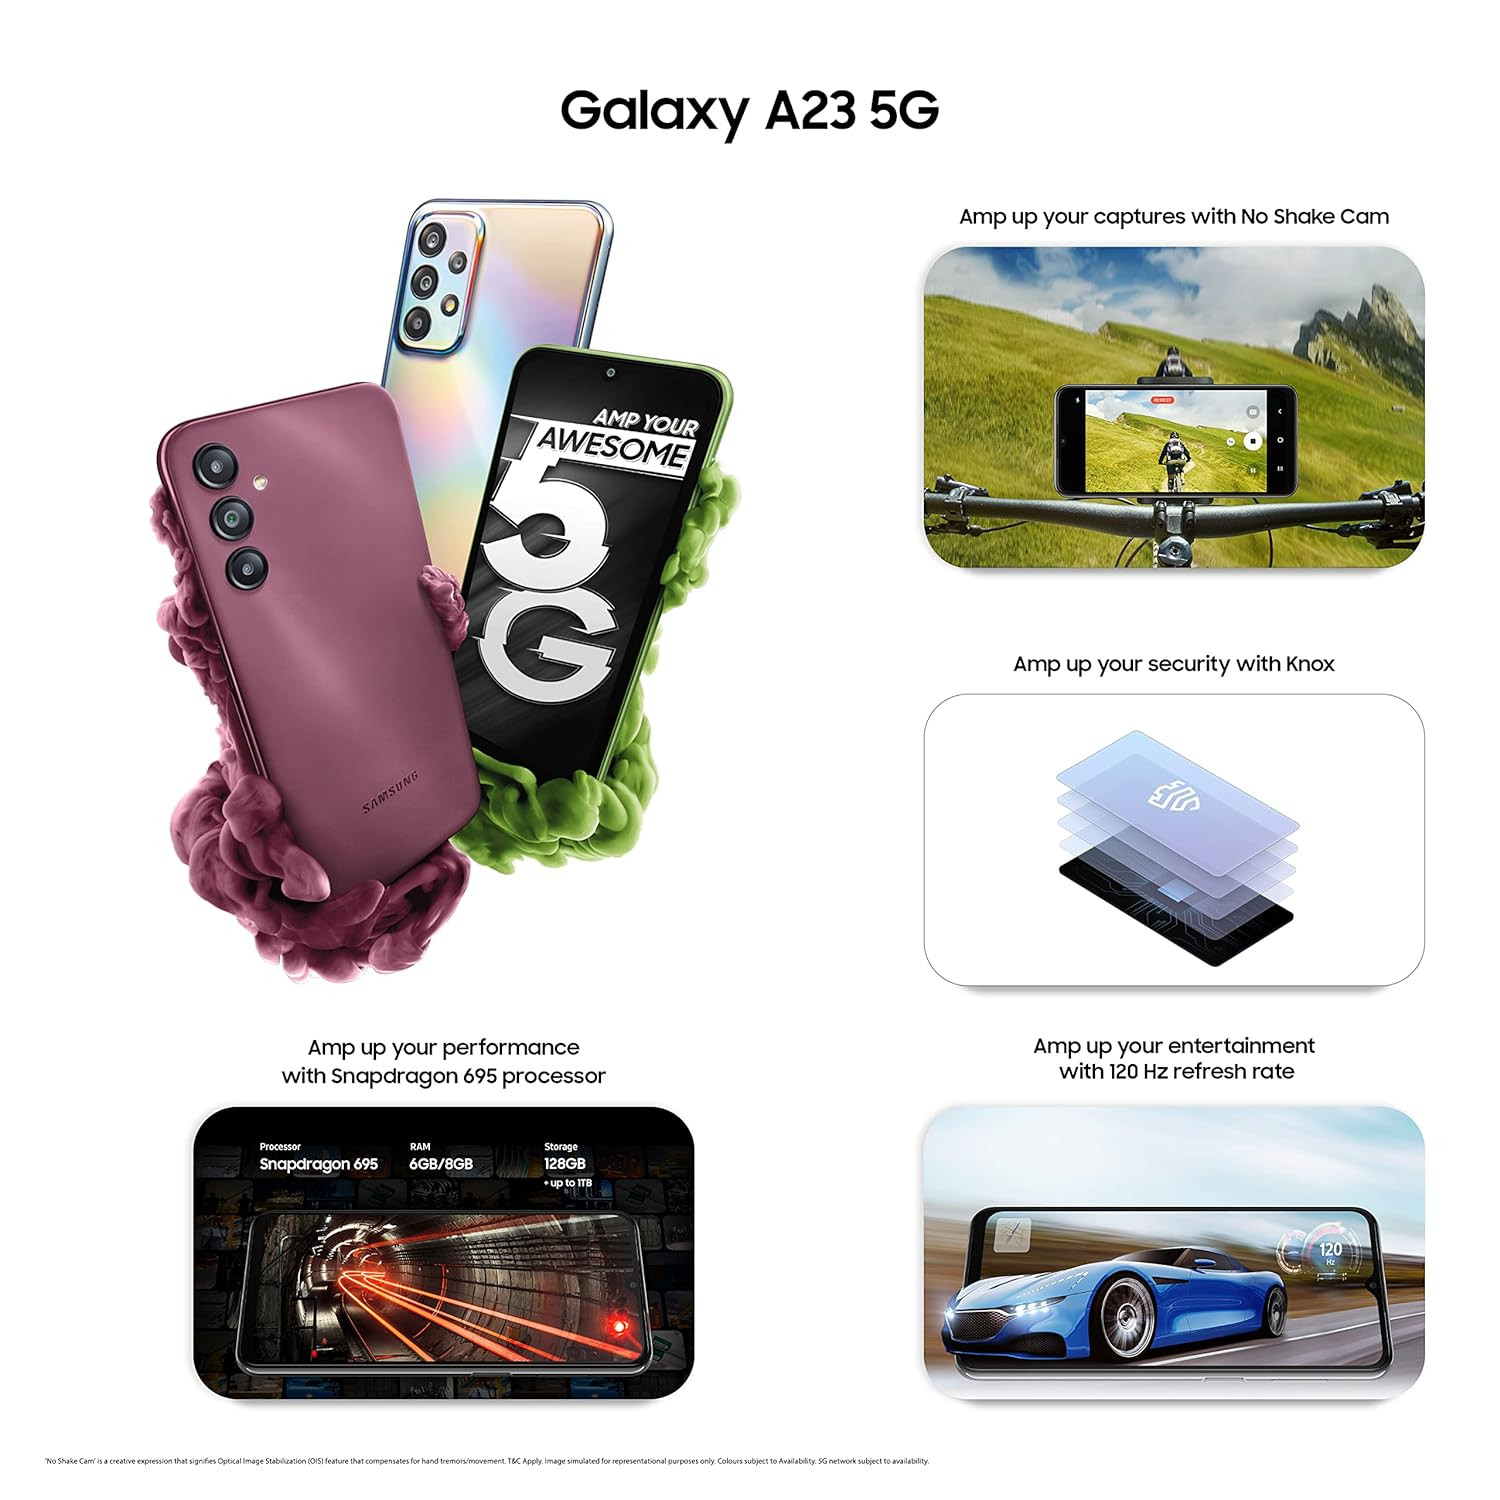 Samsung Galaxy A23 5G, Light Blue (8GB, 128GB Storage) Without Offer